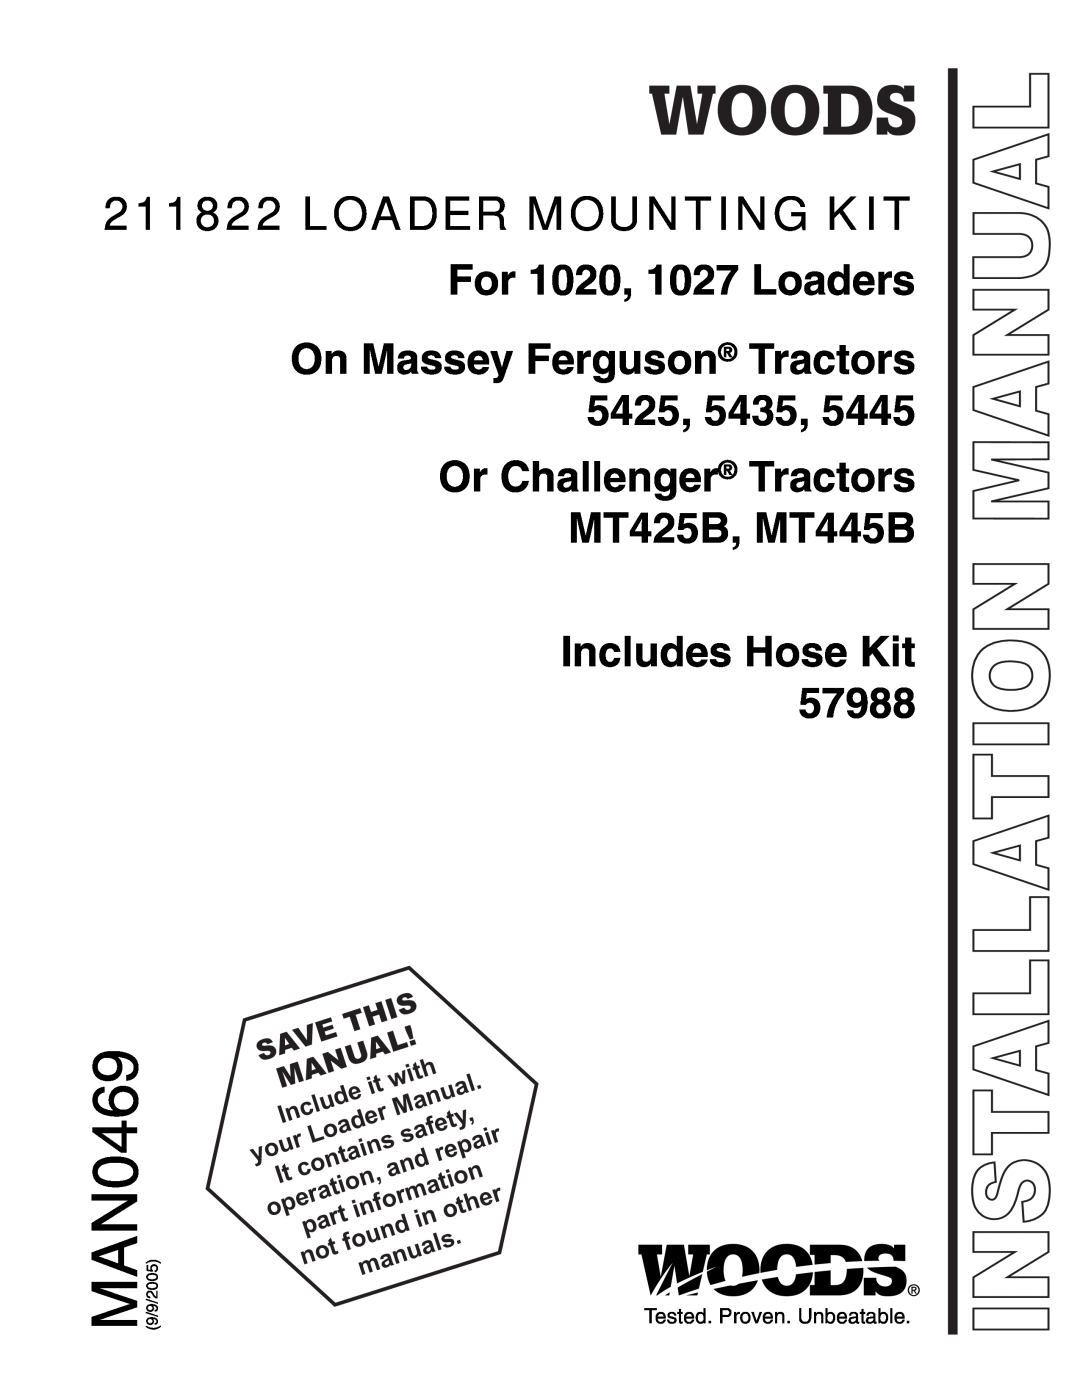 Woods Equipment 211822 installation manual MAN0469, Loader Mounting Kit, For 1020, 1027 Loaders, Includes Hose Kit, Save 